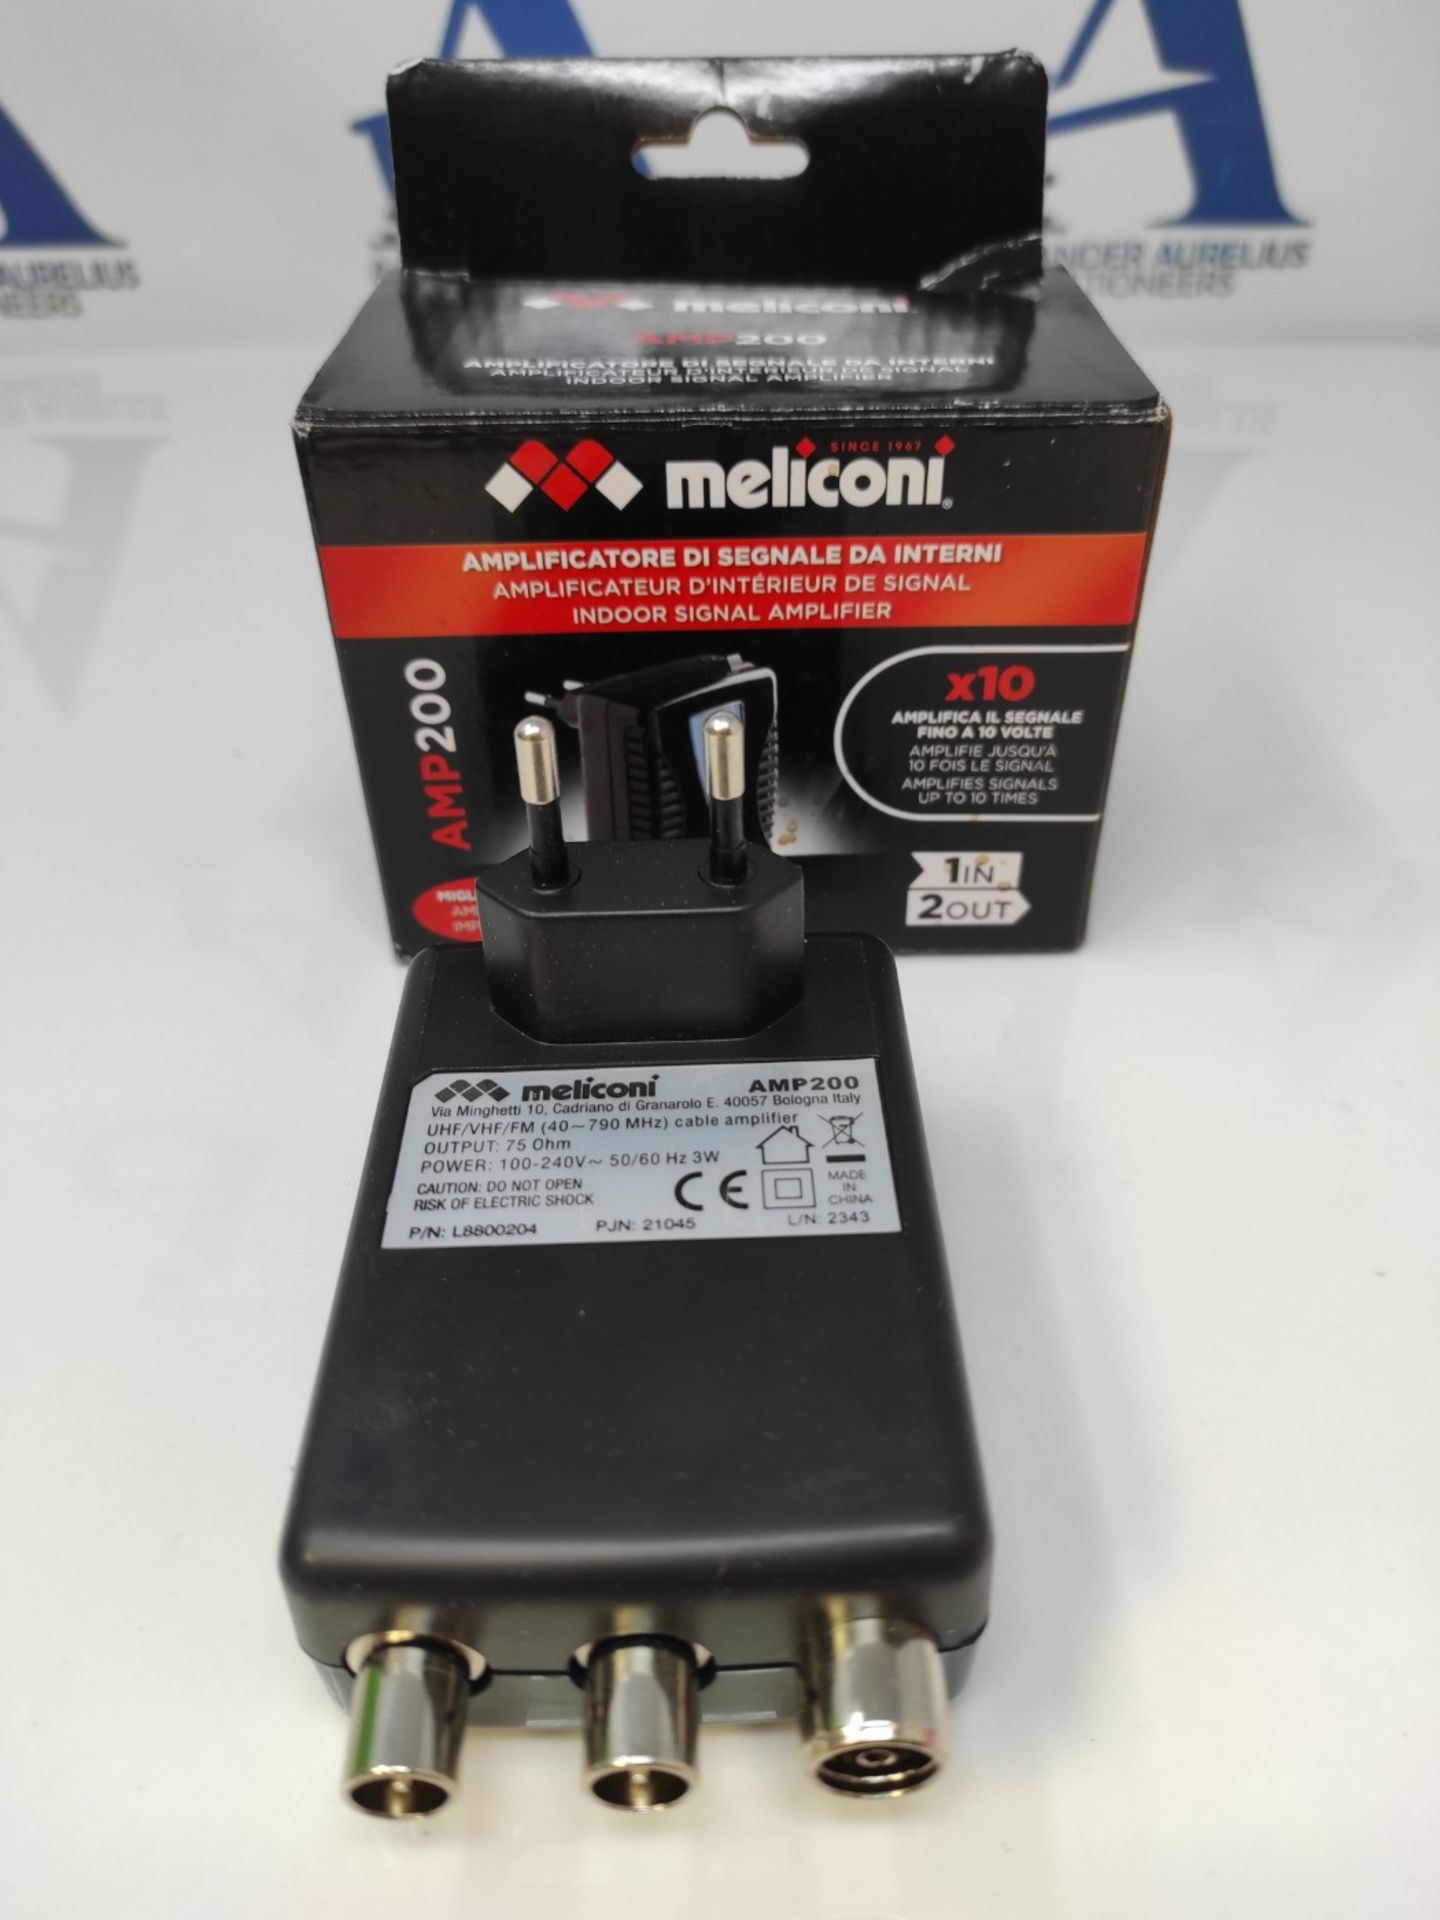 Meliconi AMP200, TV Antenna Amplifier, 2-Way Indoor Digital Signal Amplifier, Direct 2 - Image 2 of 2